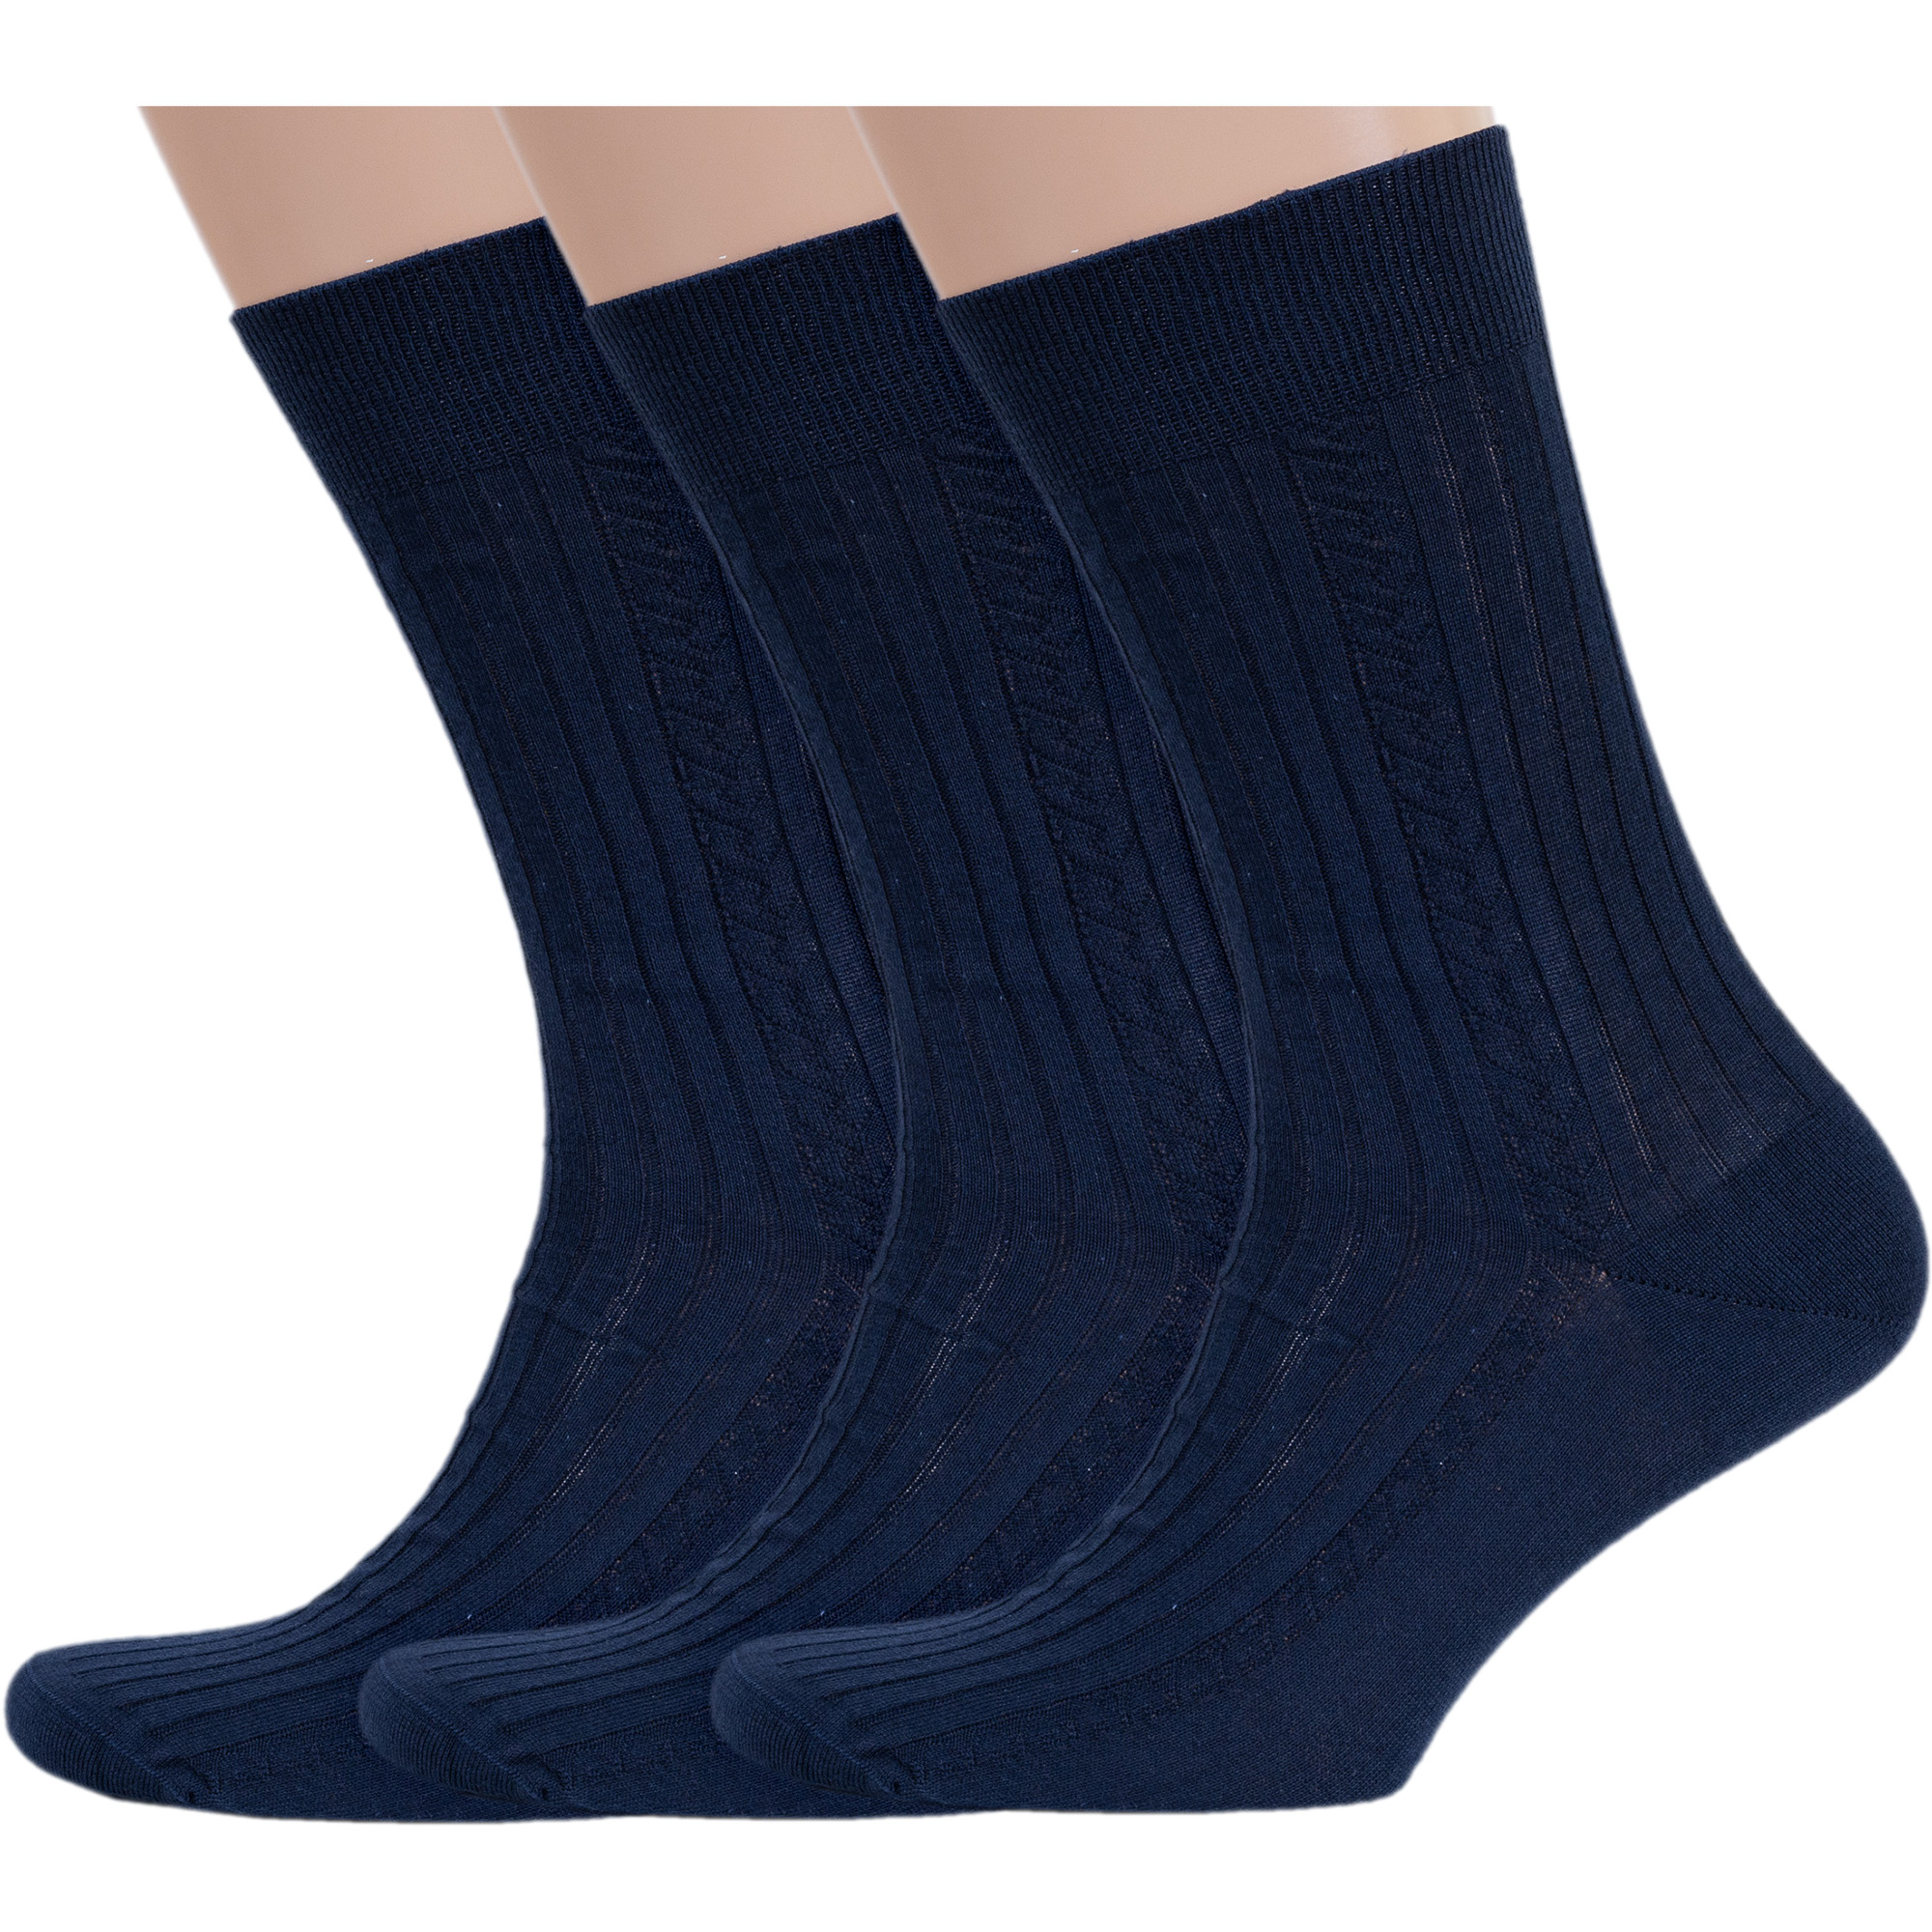 Комплект носков мужских Rusocks синих